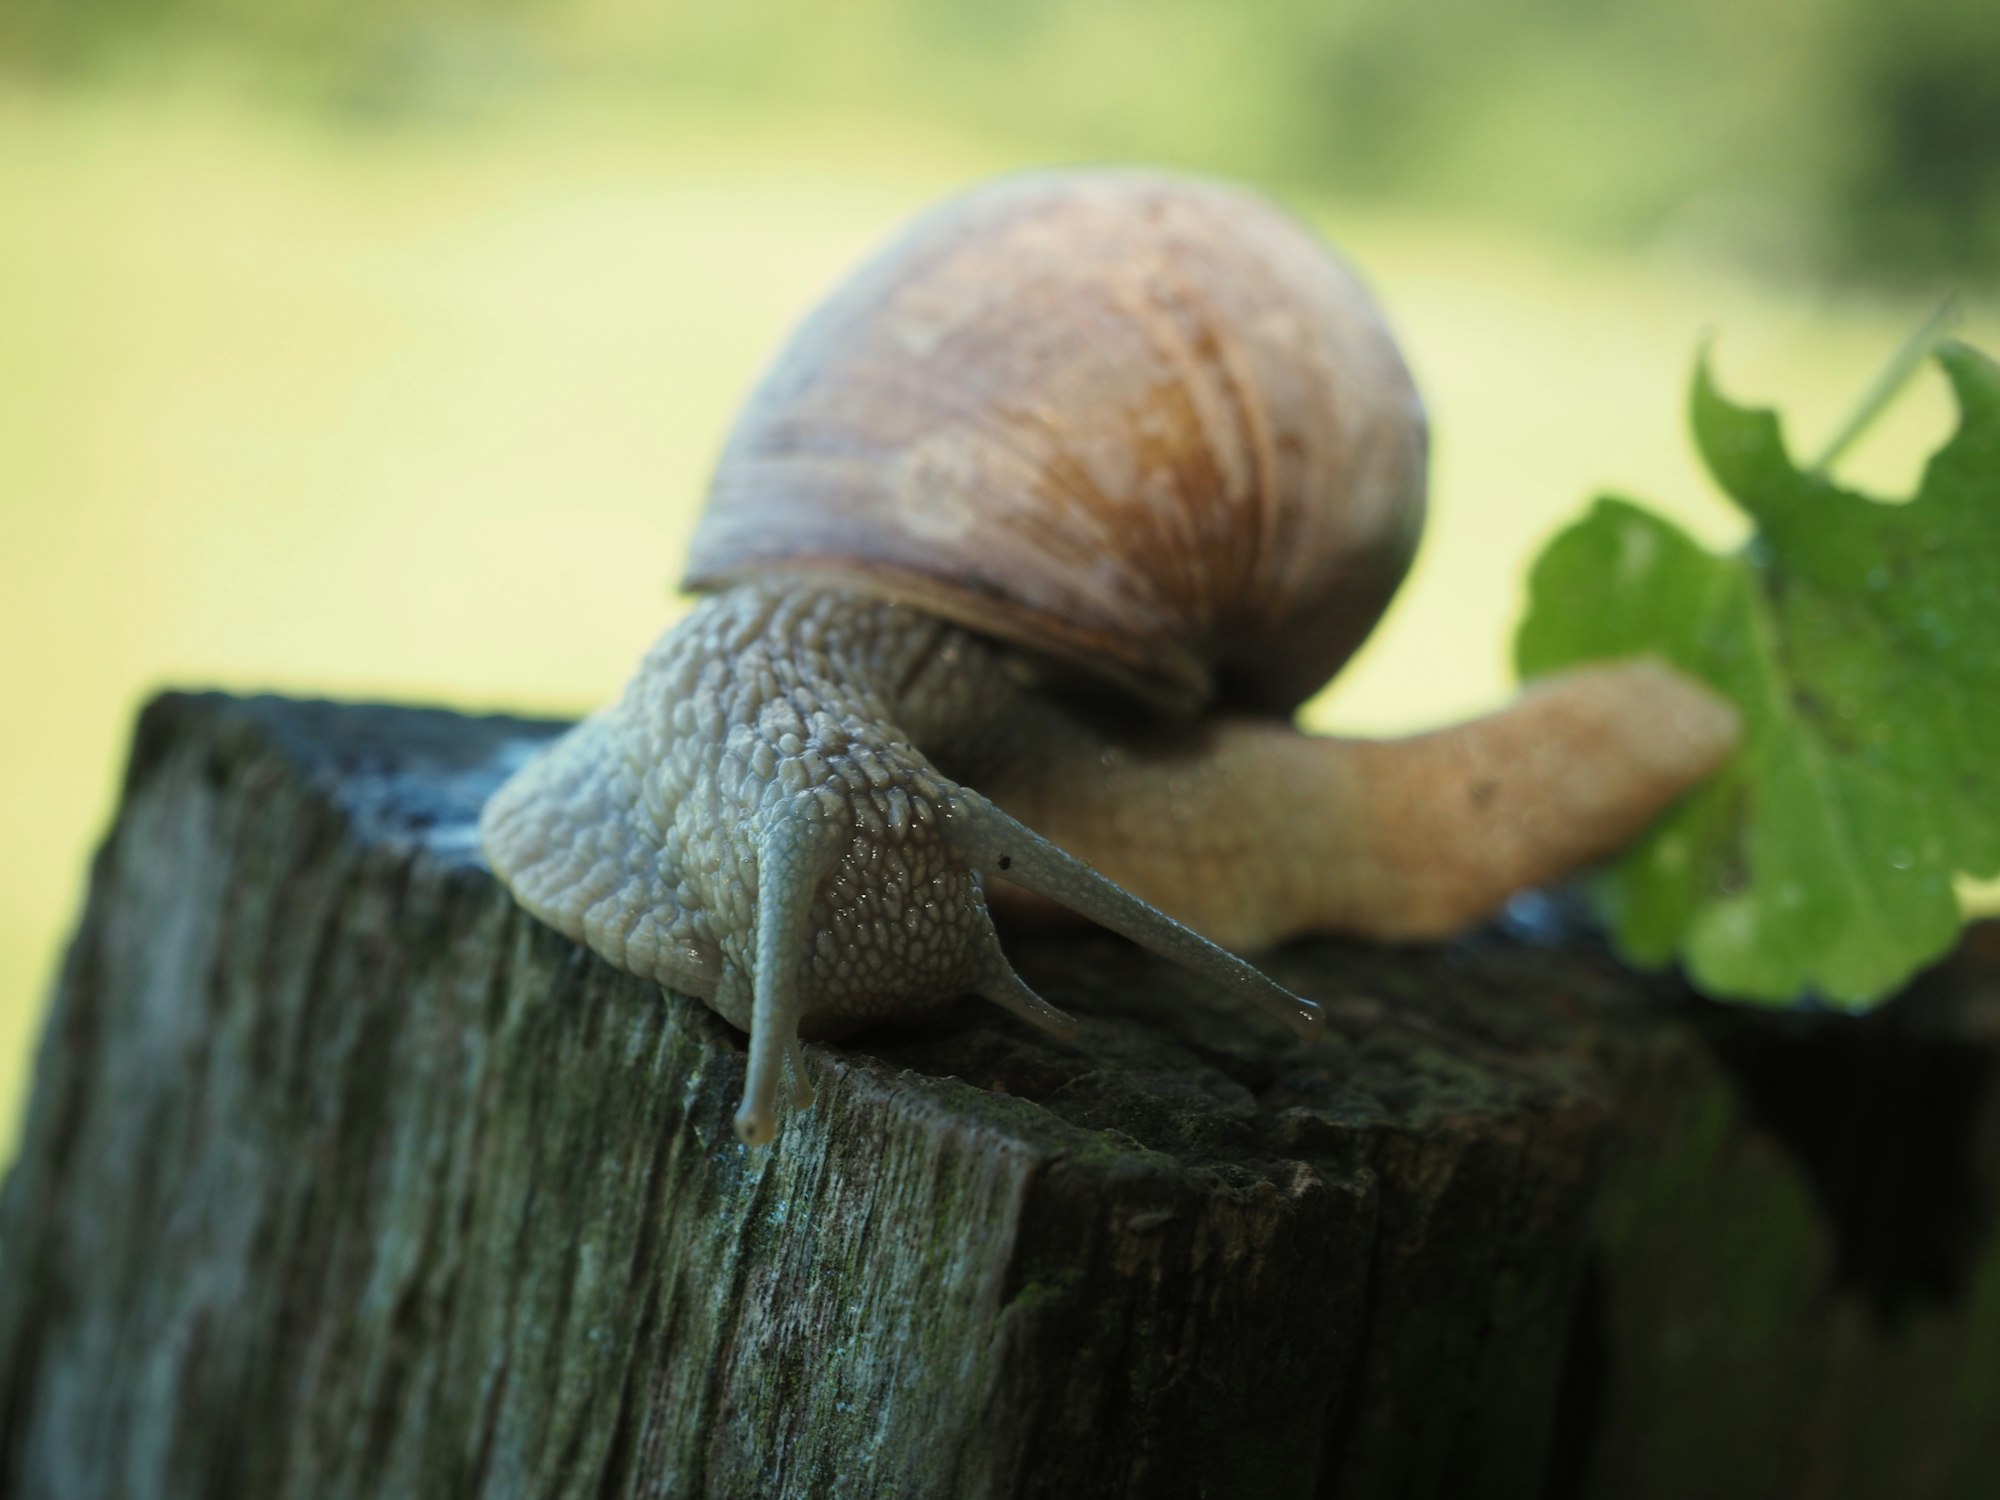 A snail in detail